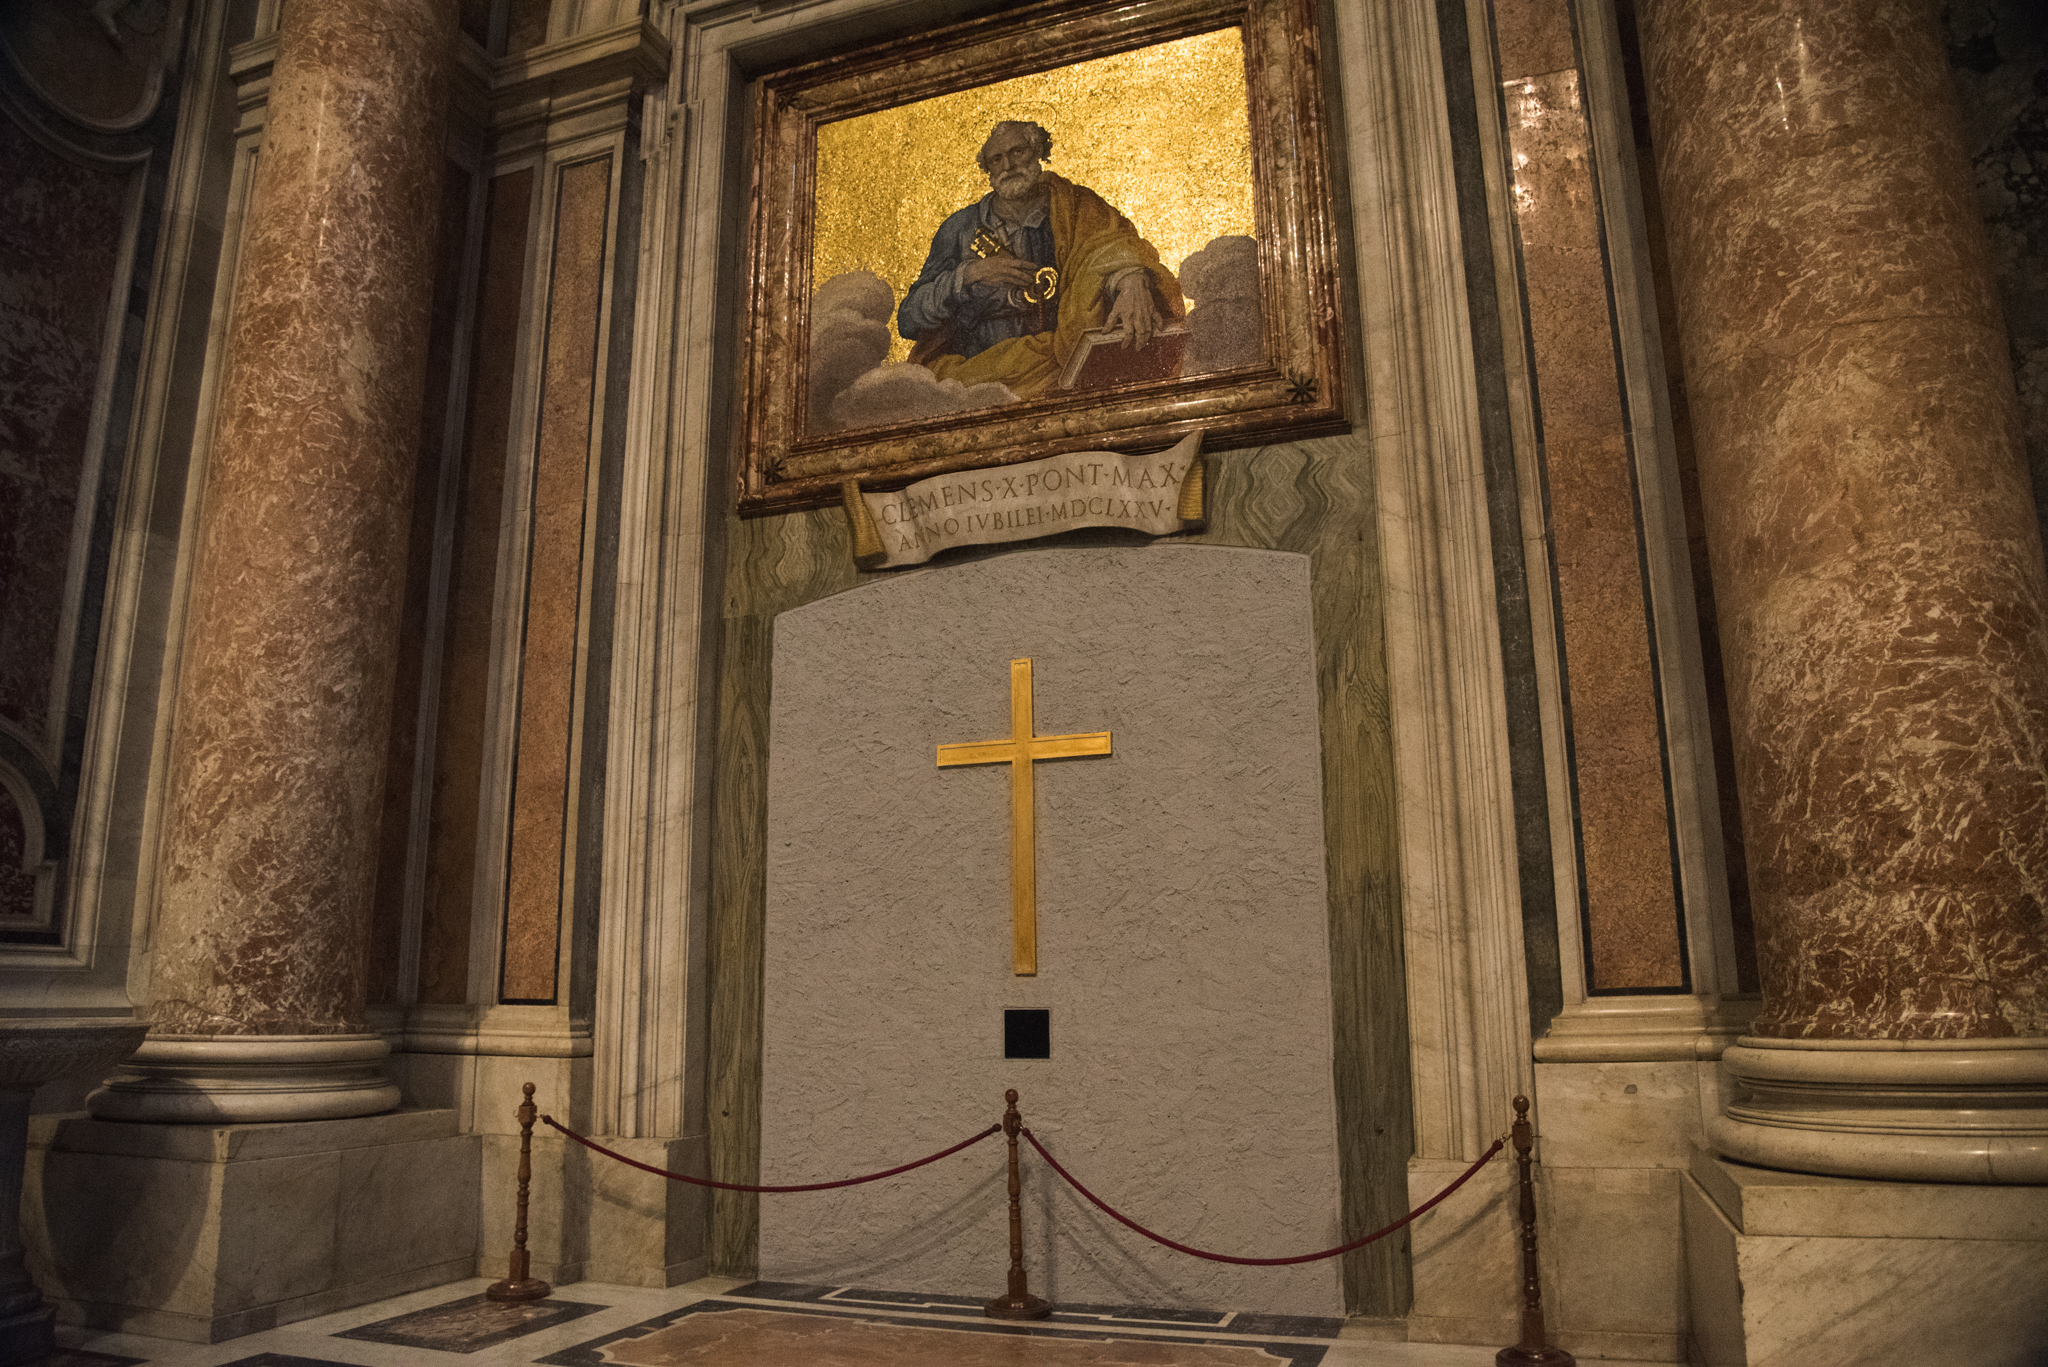 The Holy Door - St. Peter's Basilica